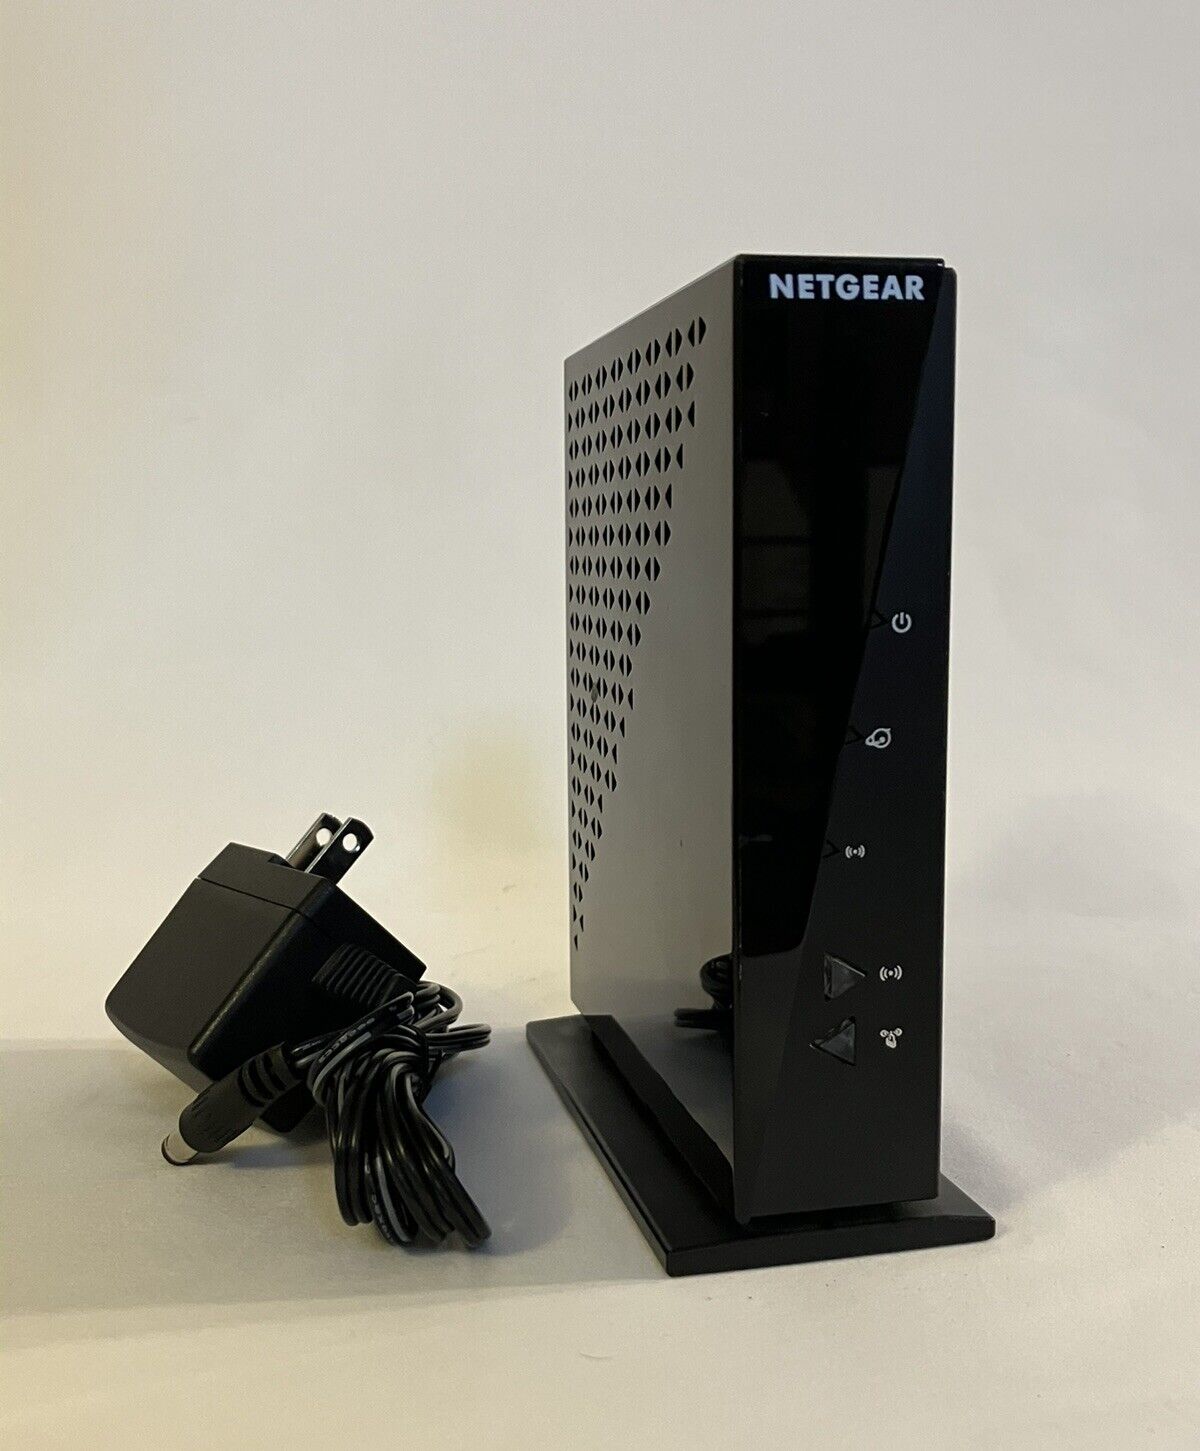 NETGEAR - WNR2000v3 - N300 Wireless Router - Tested Working